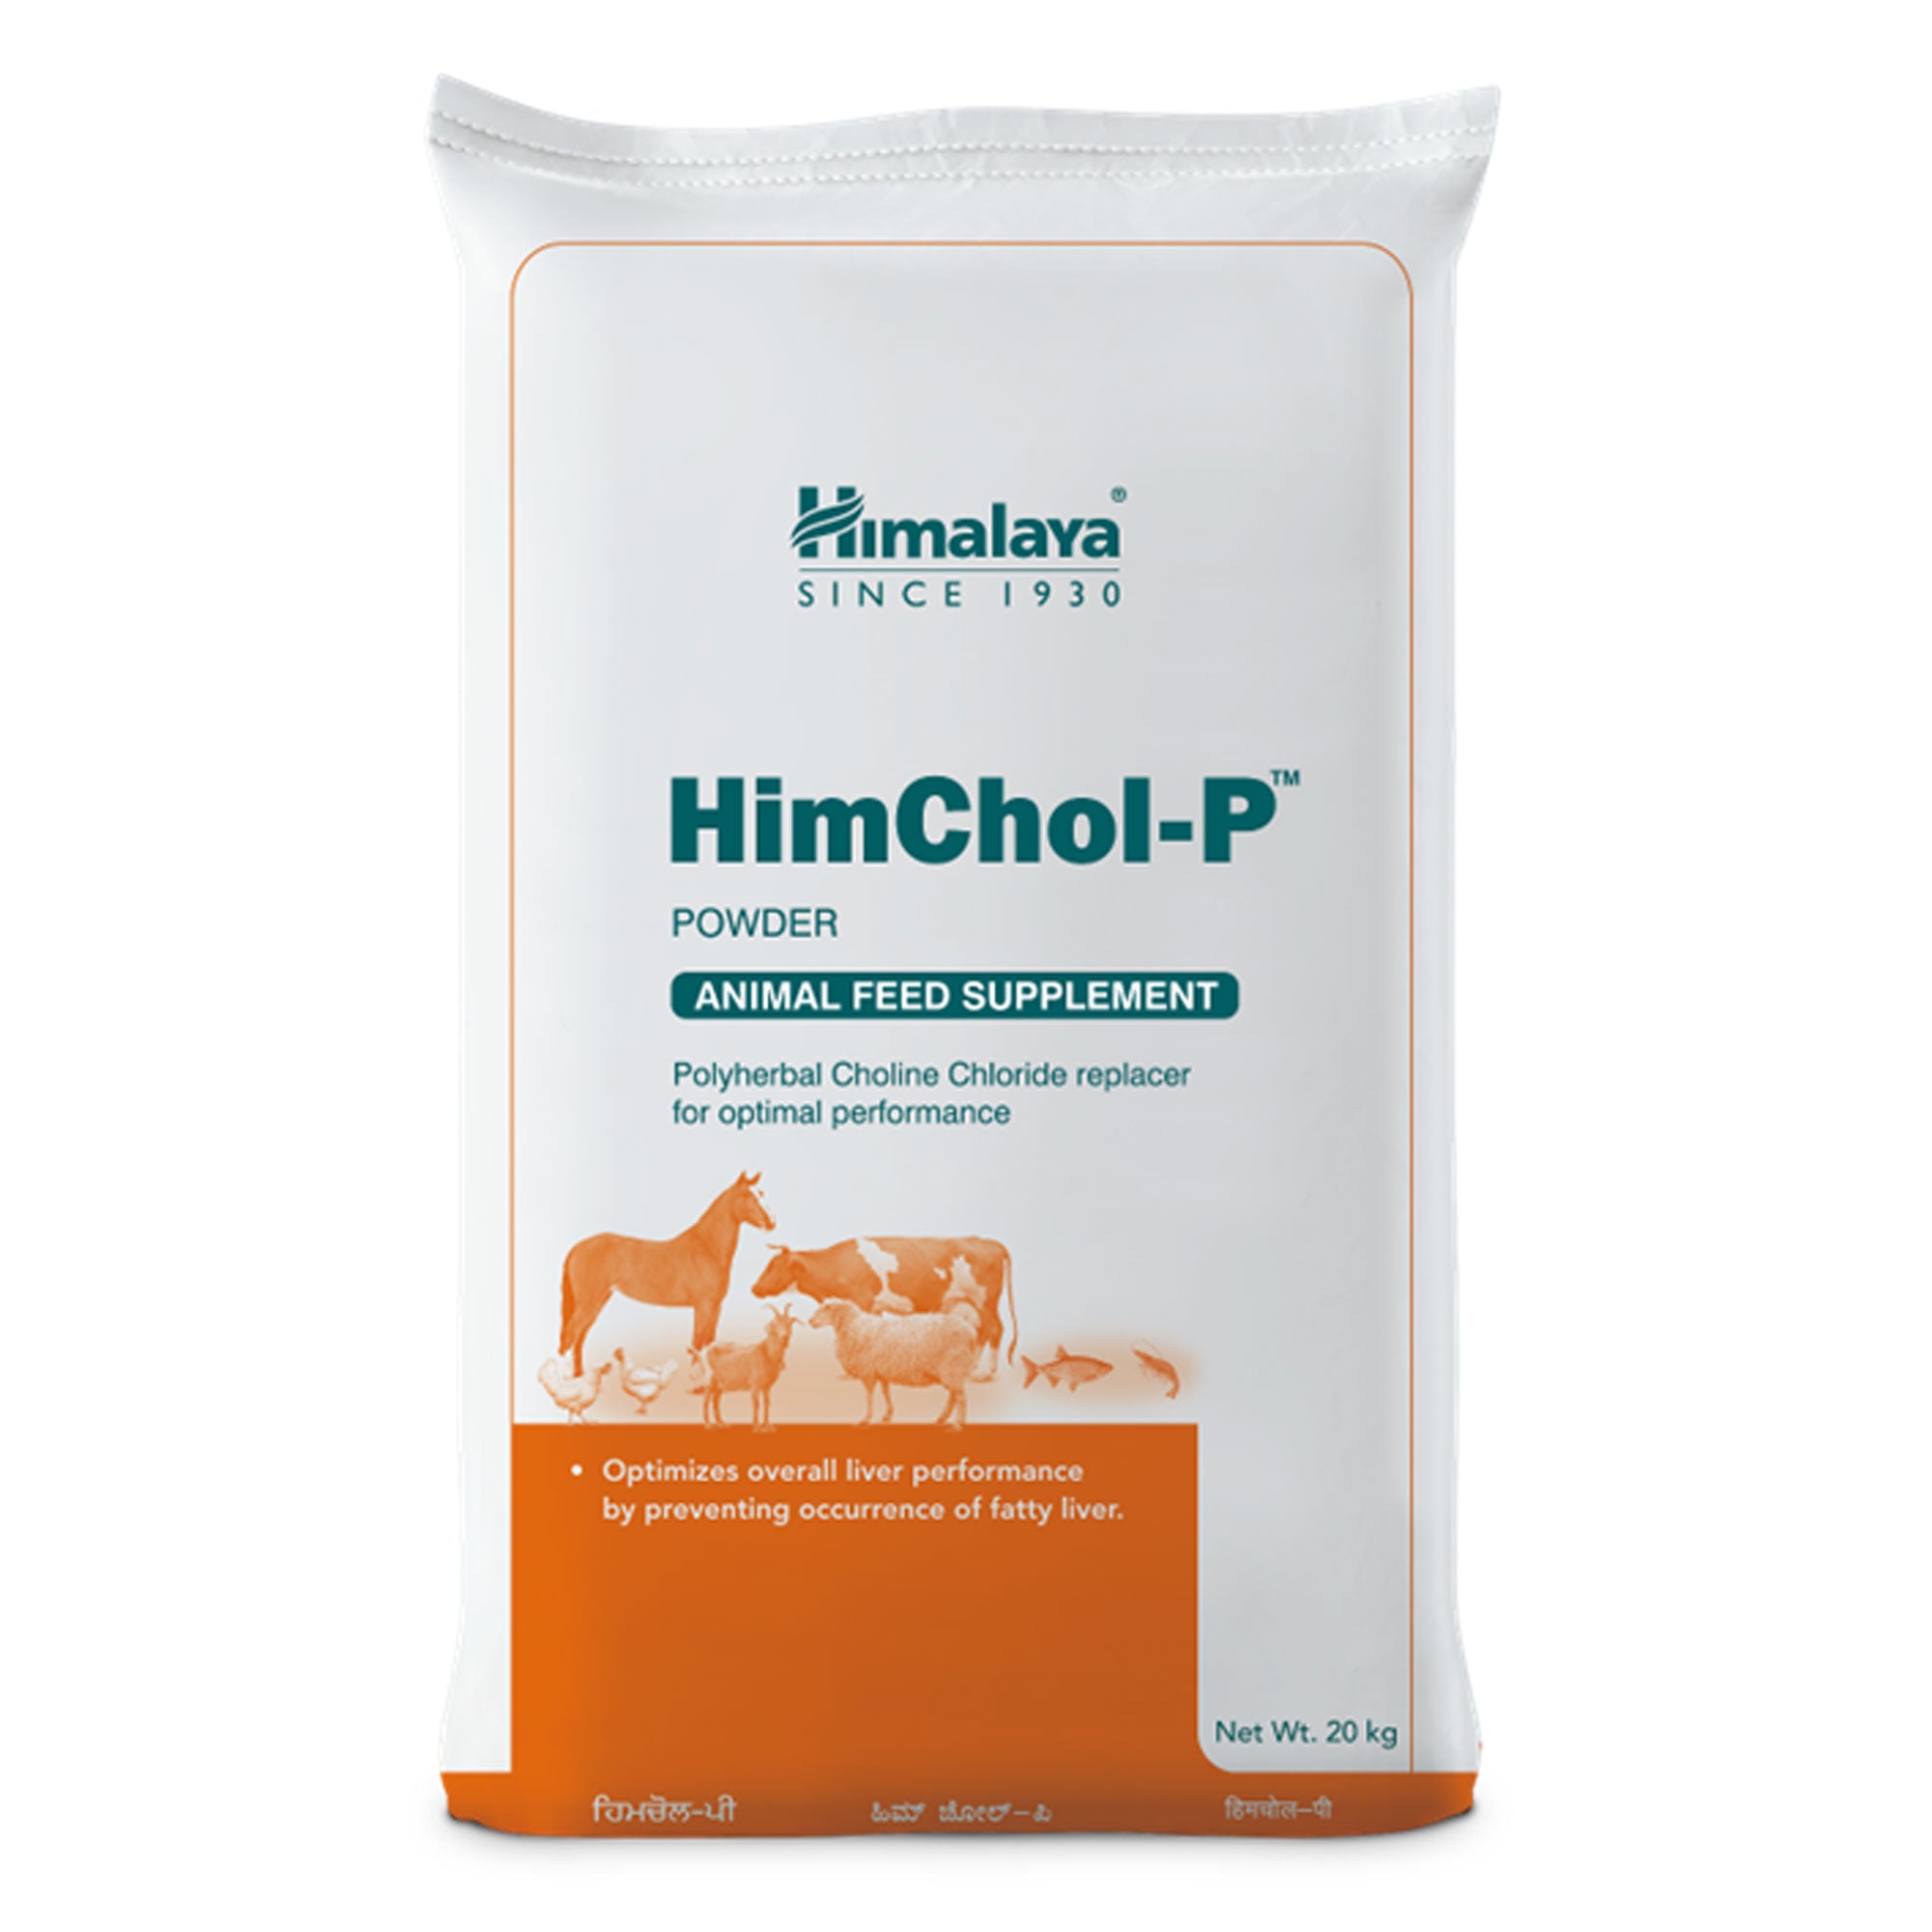 Himalaya HimChol-P 20kg - Animal Feed Supplement